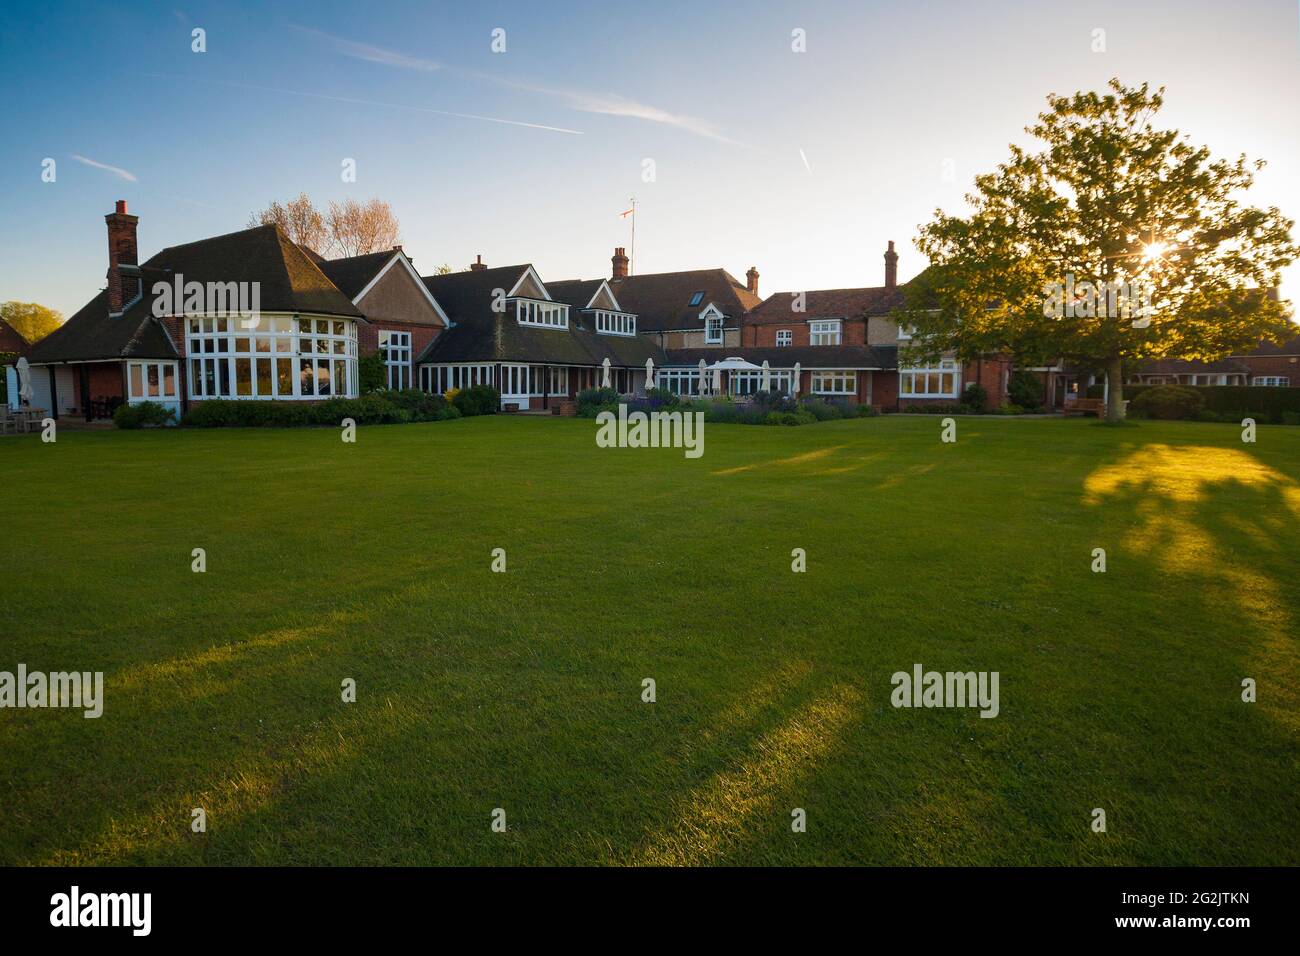 Royal Saint George's Golf Course, British Open, Sandwich, Kent, Inghilterra. Foto Stock